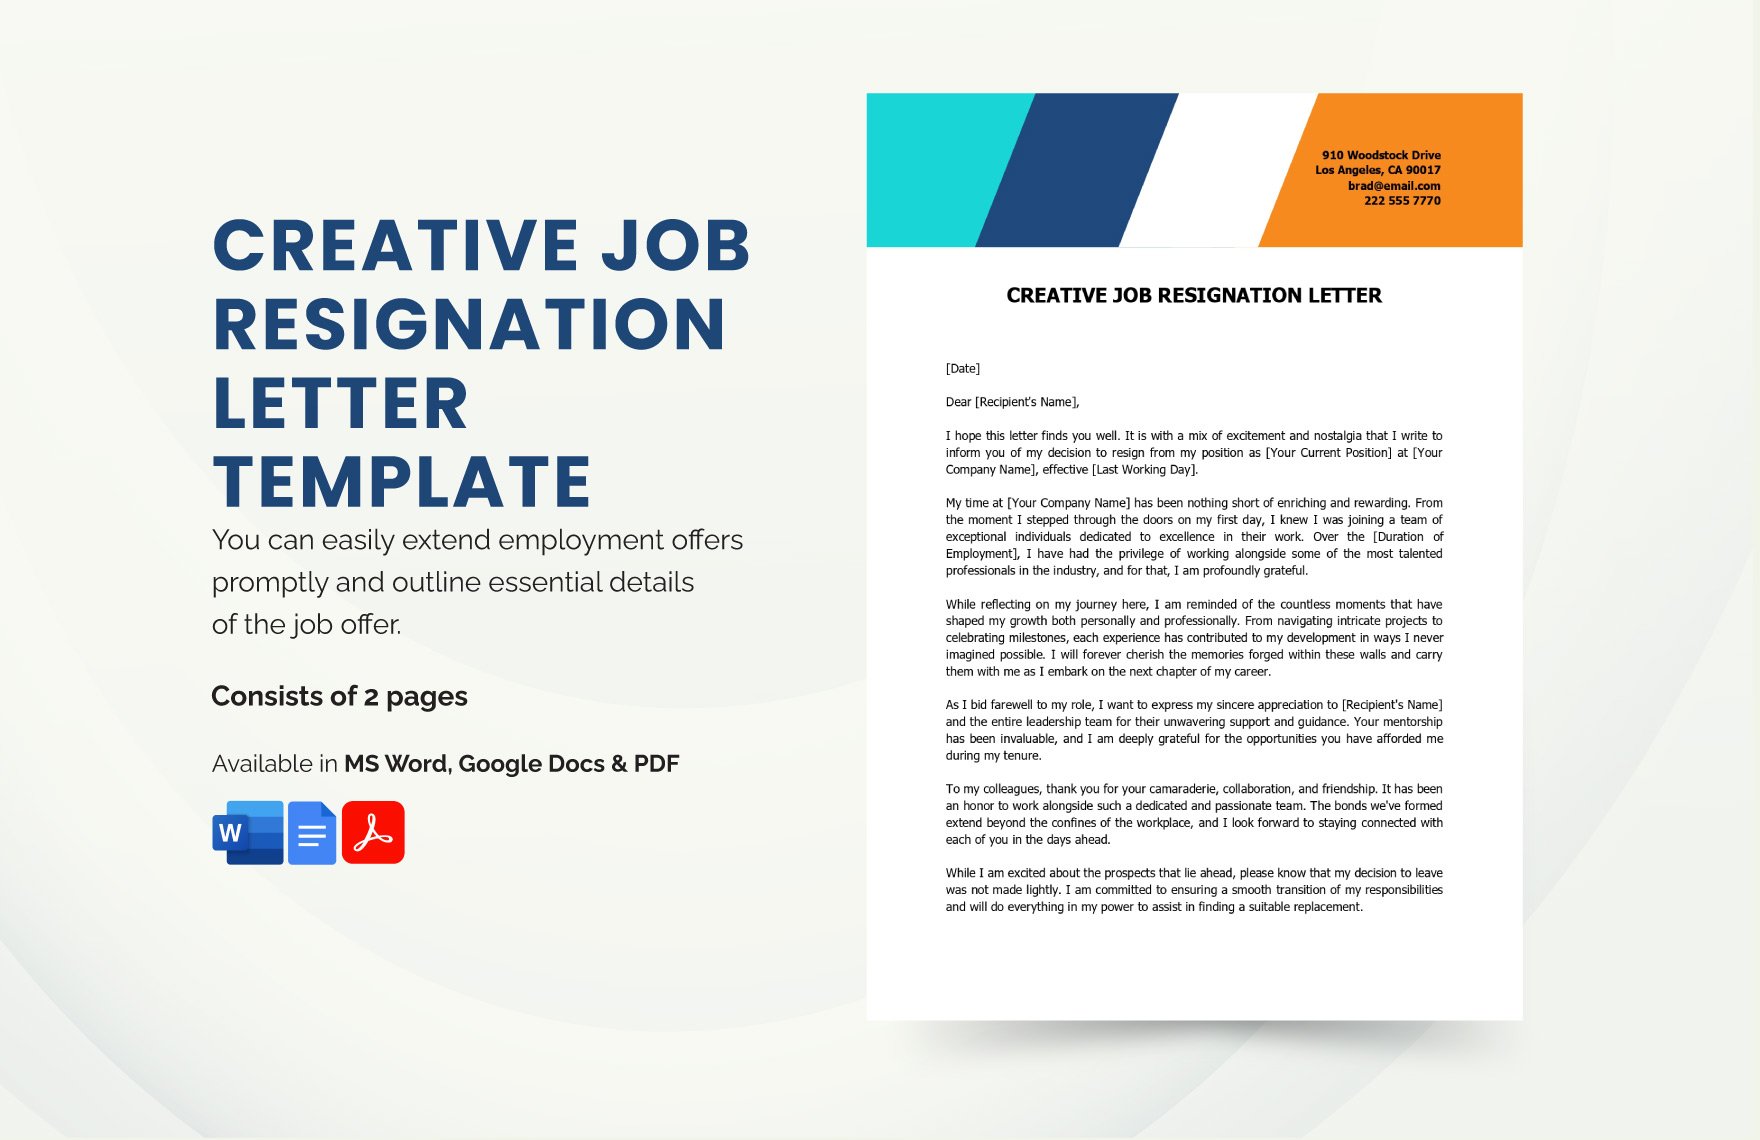 Creative Job Resignation Letter Template